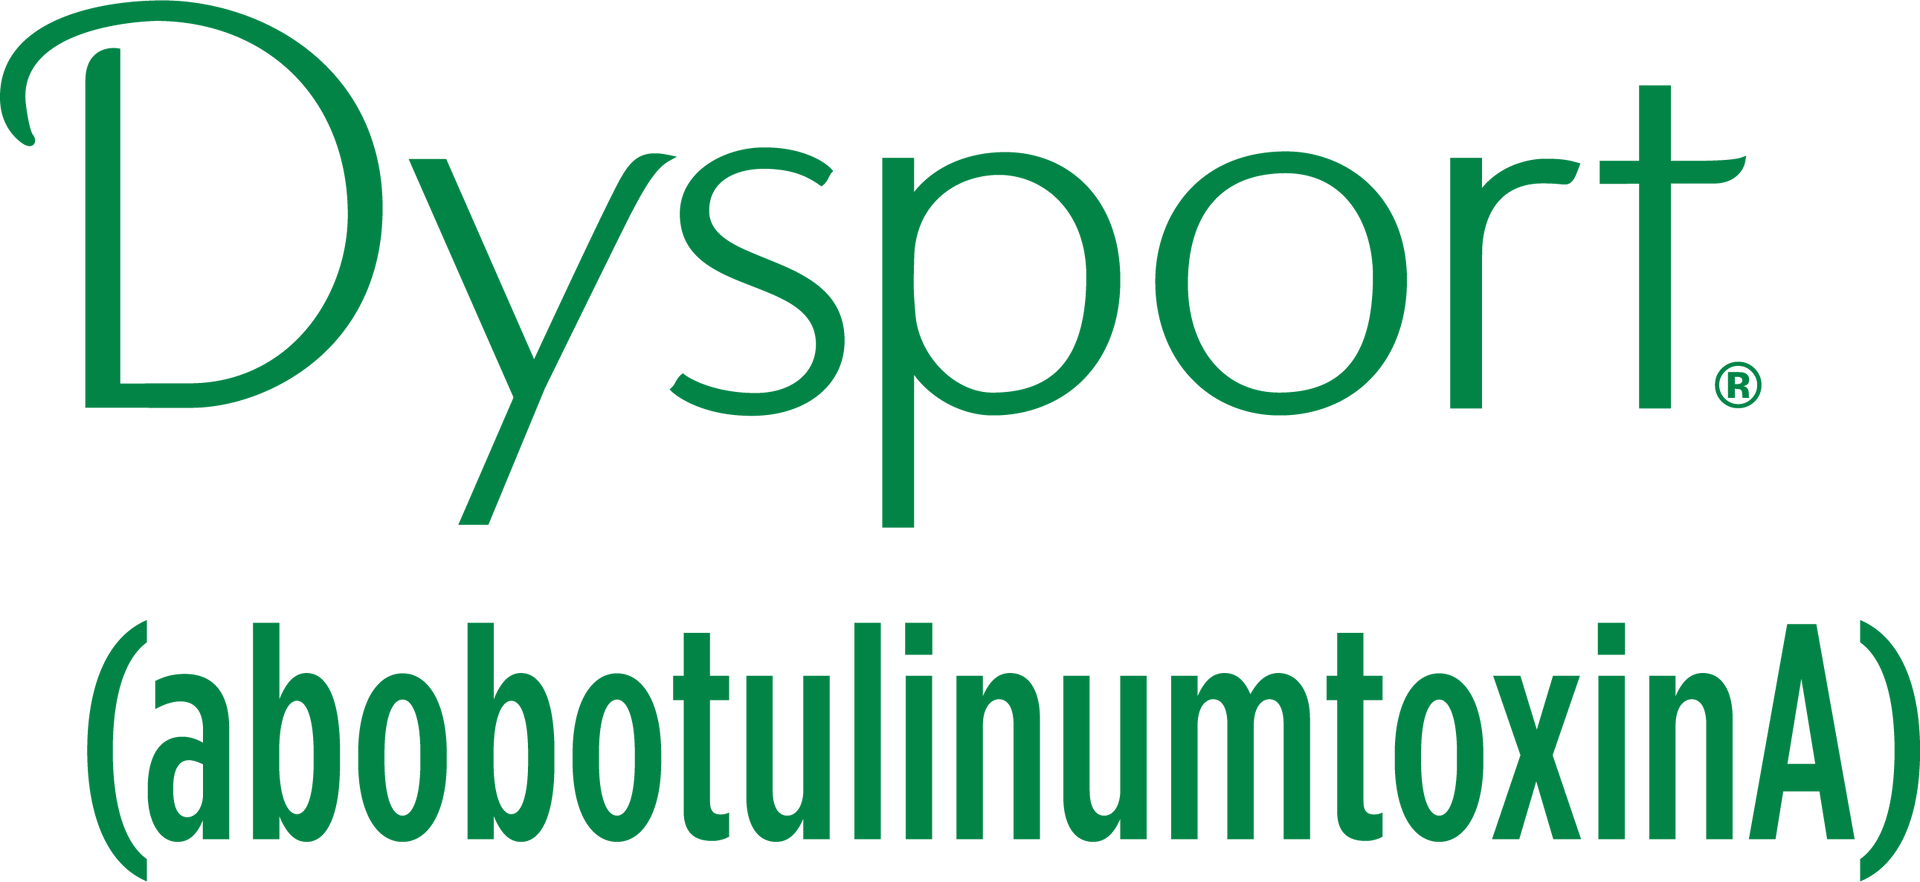 logo for Dysport abobotulinumtoxinA injection